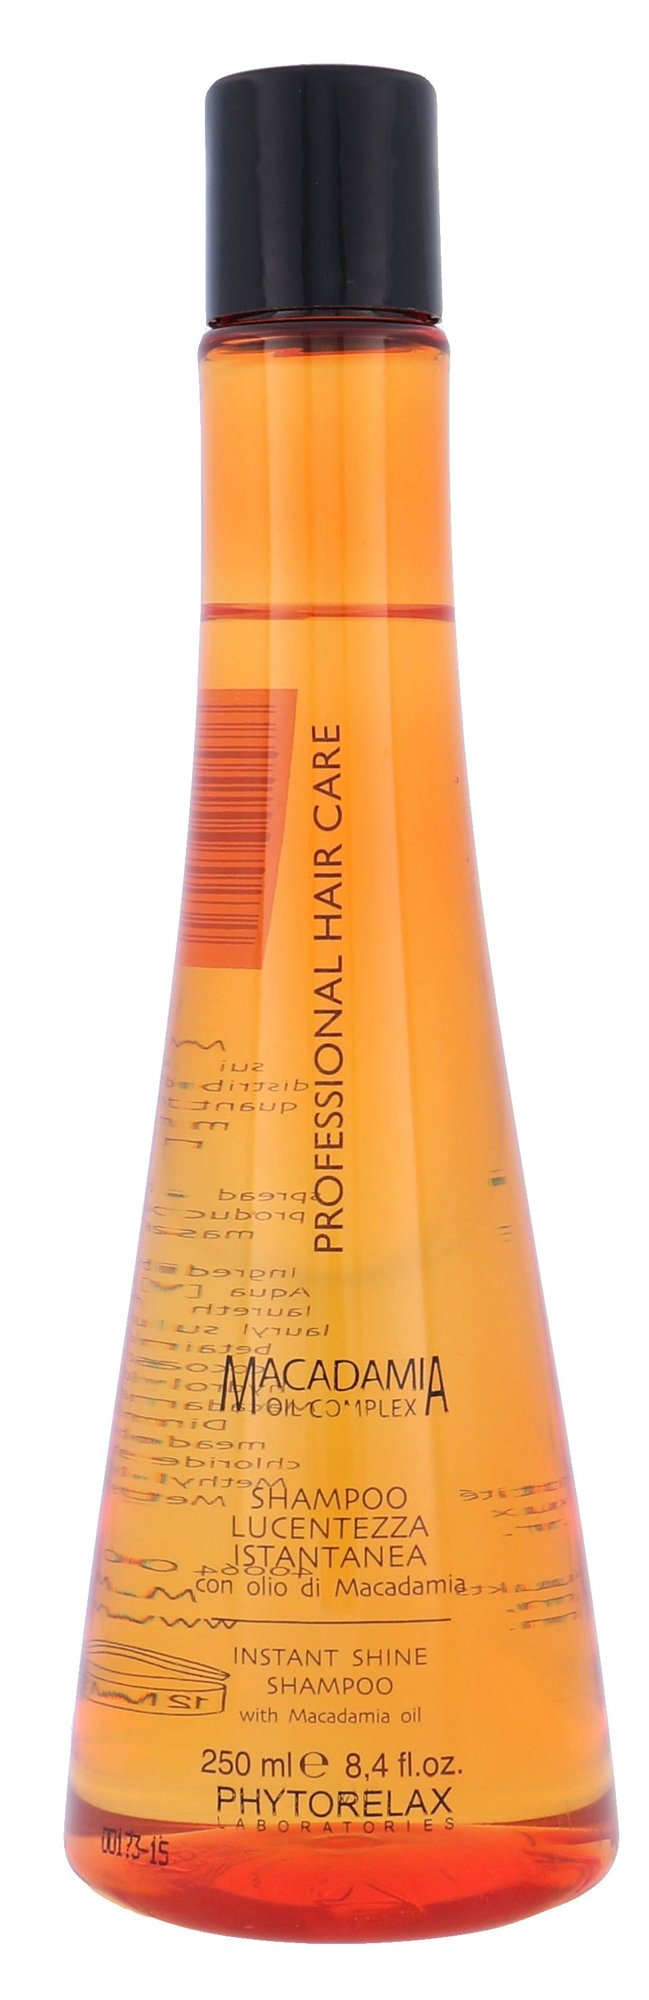 Phytorelax Laboratories Macadamia Professional Hair Care šampūnas